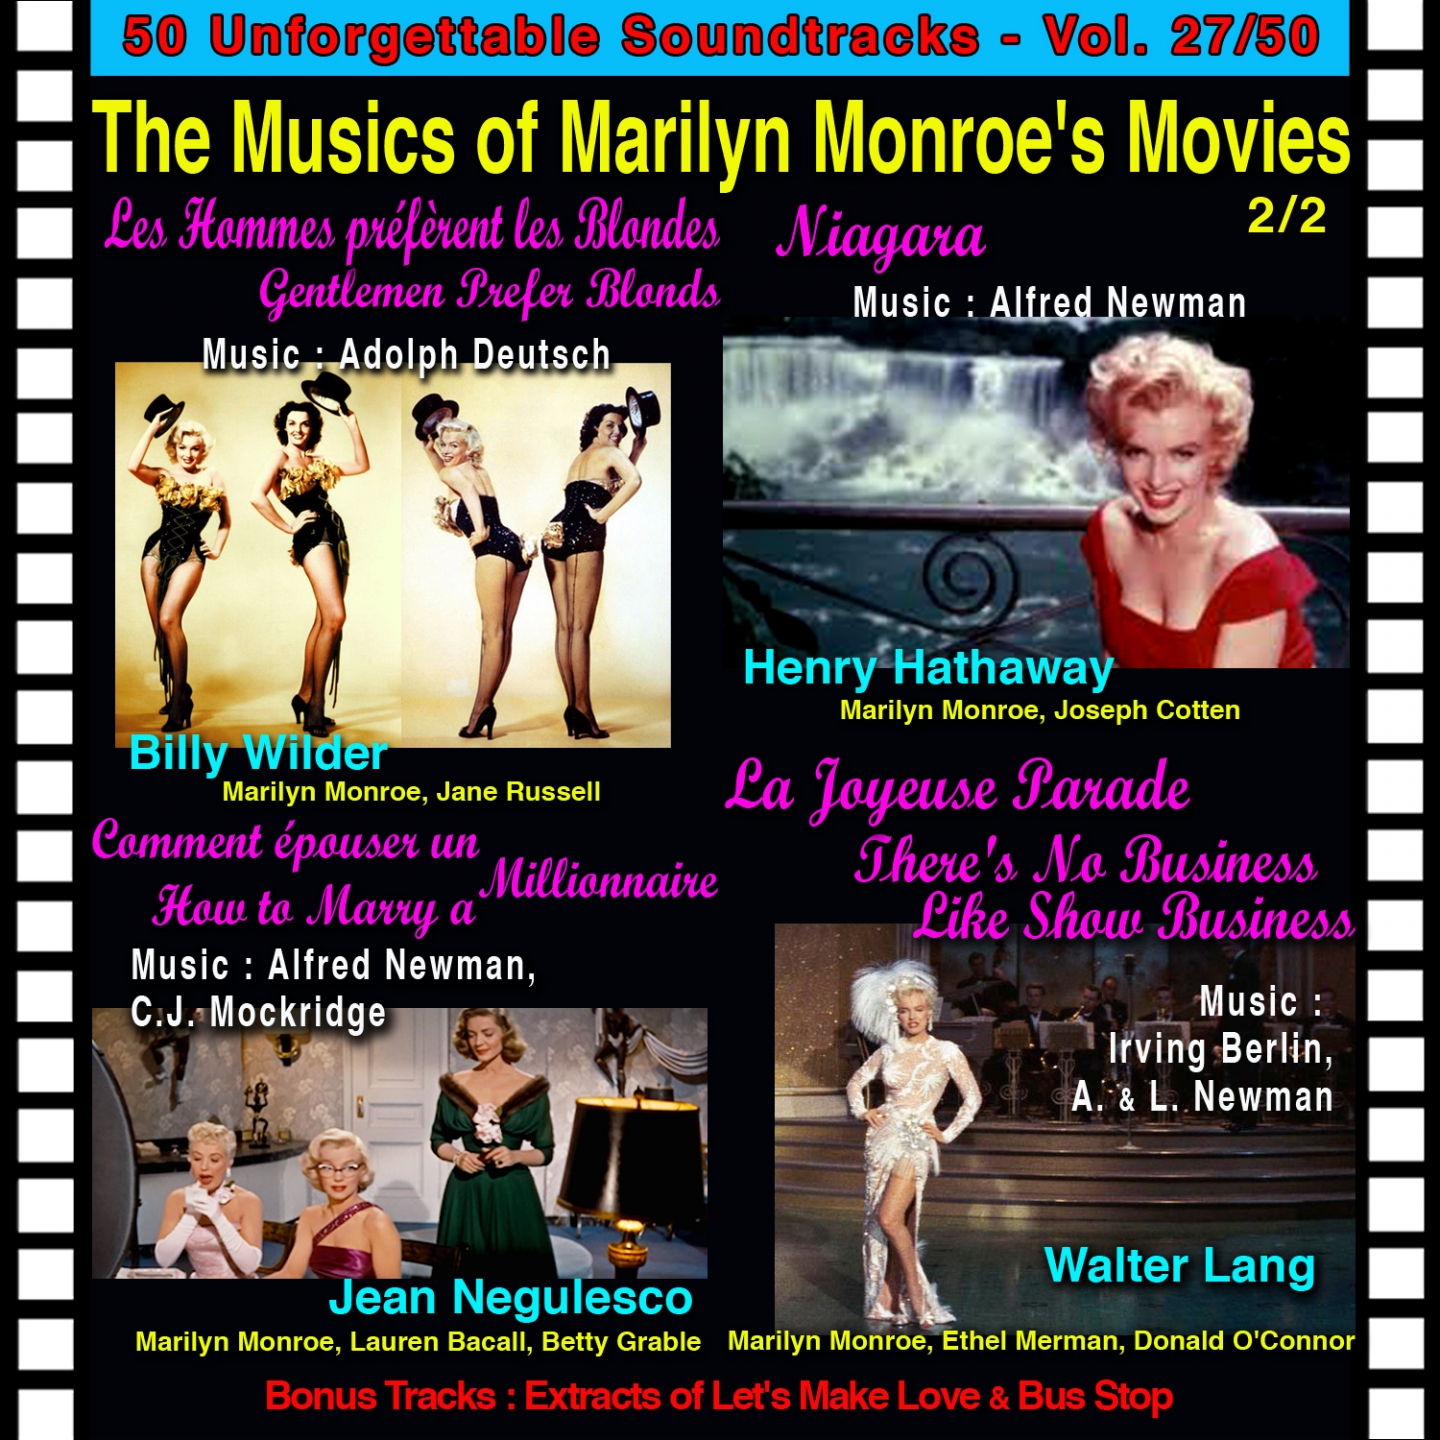 Niagara: A Fine Romance (Marilyn Music Movies (2 / 2))